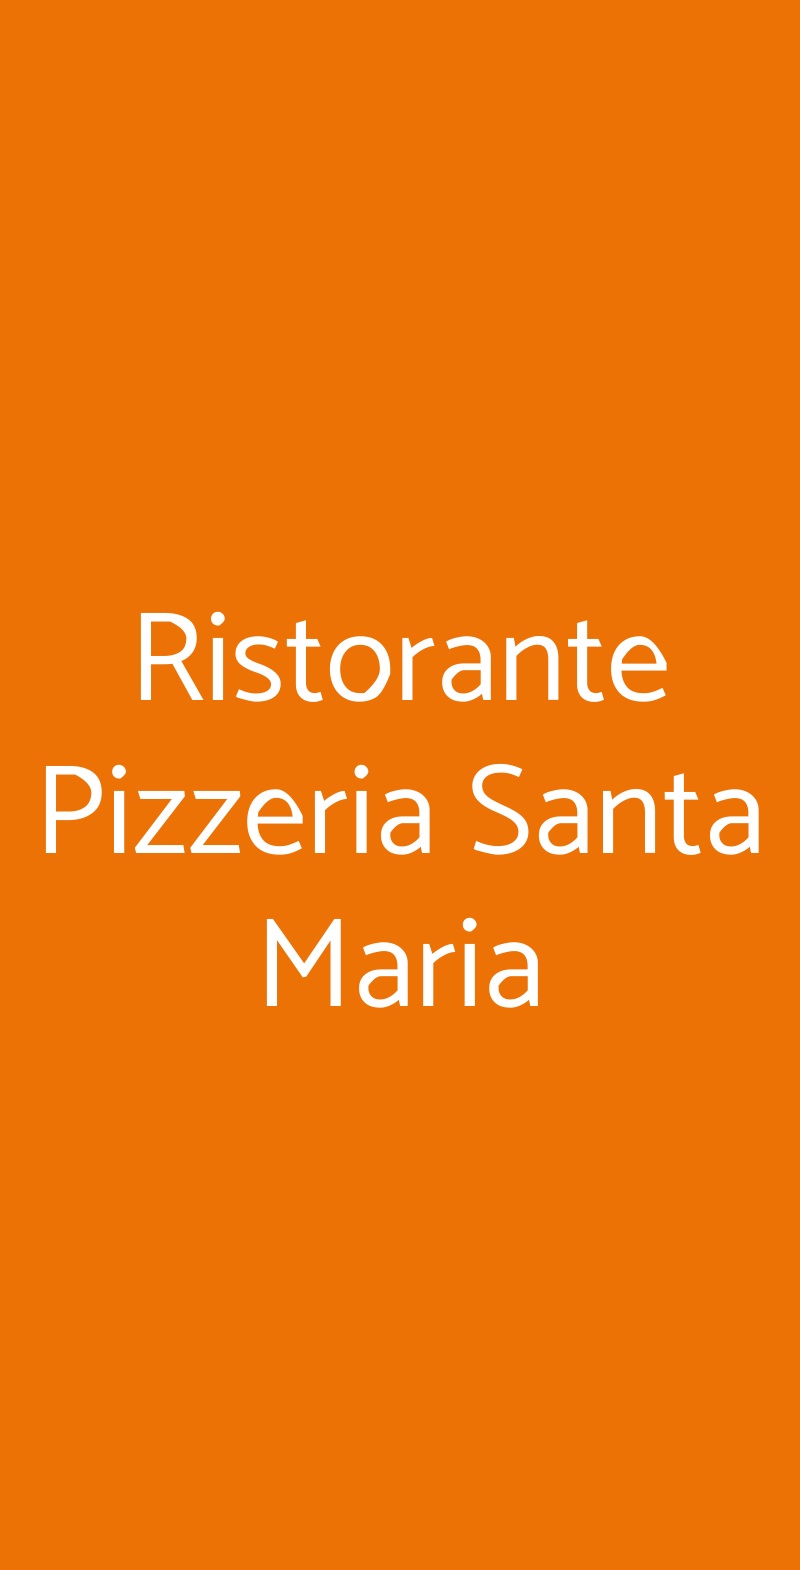 Ristorante Pizzeria Santa Maria Sarno menù 1 pagina